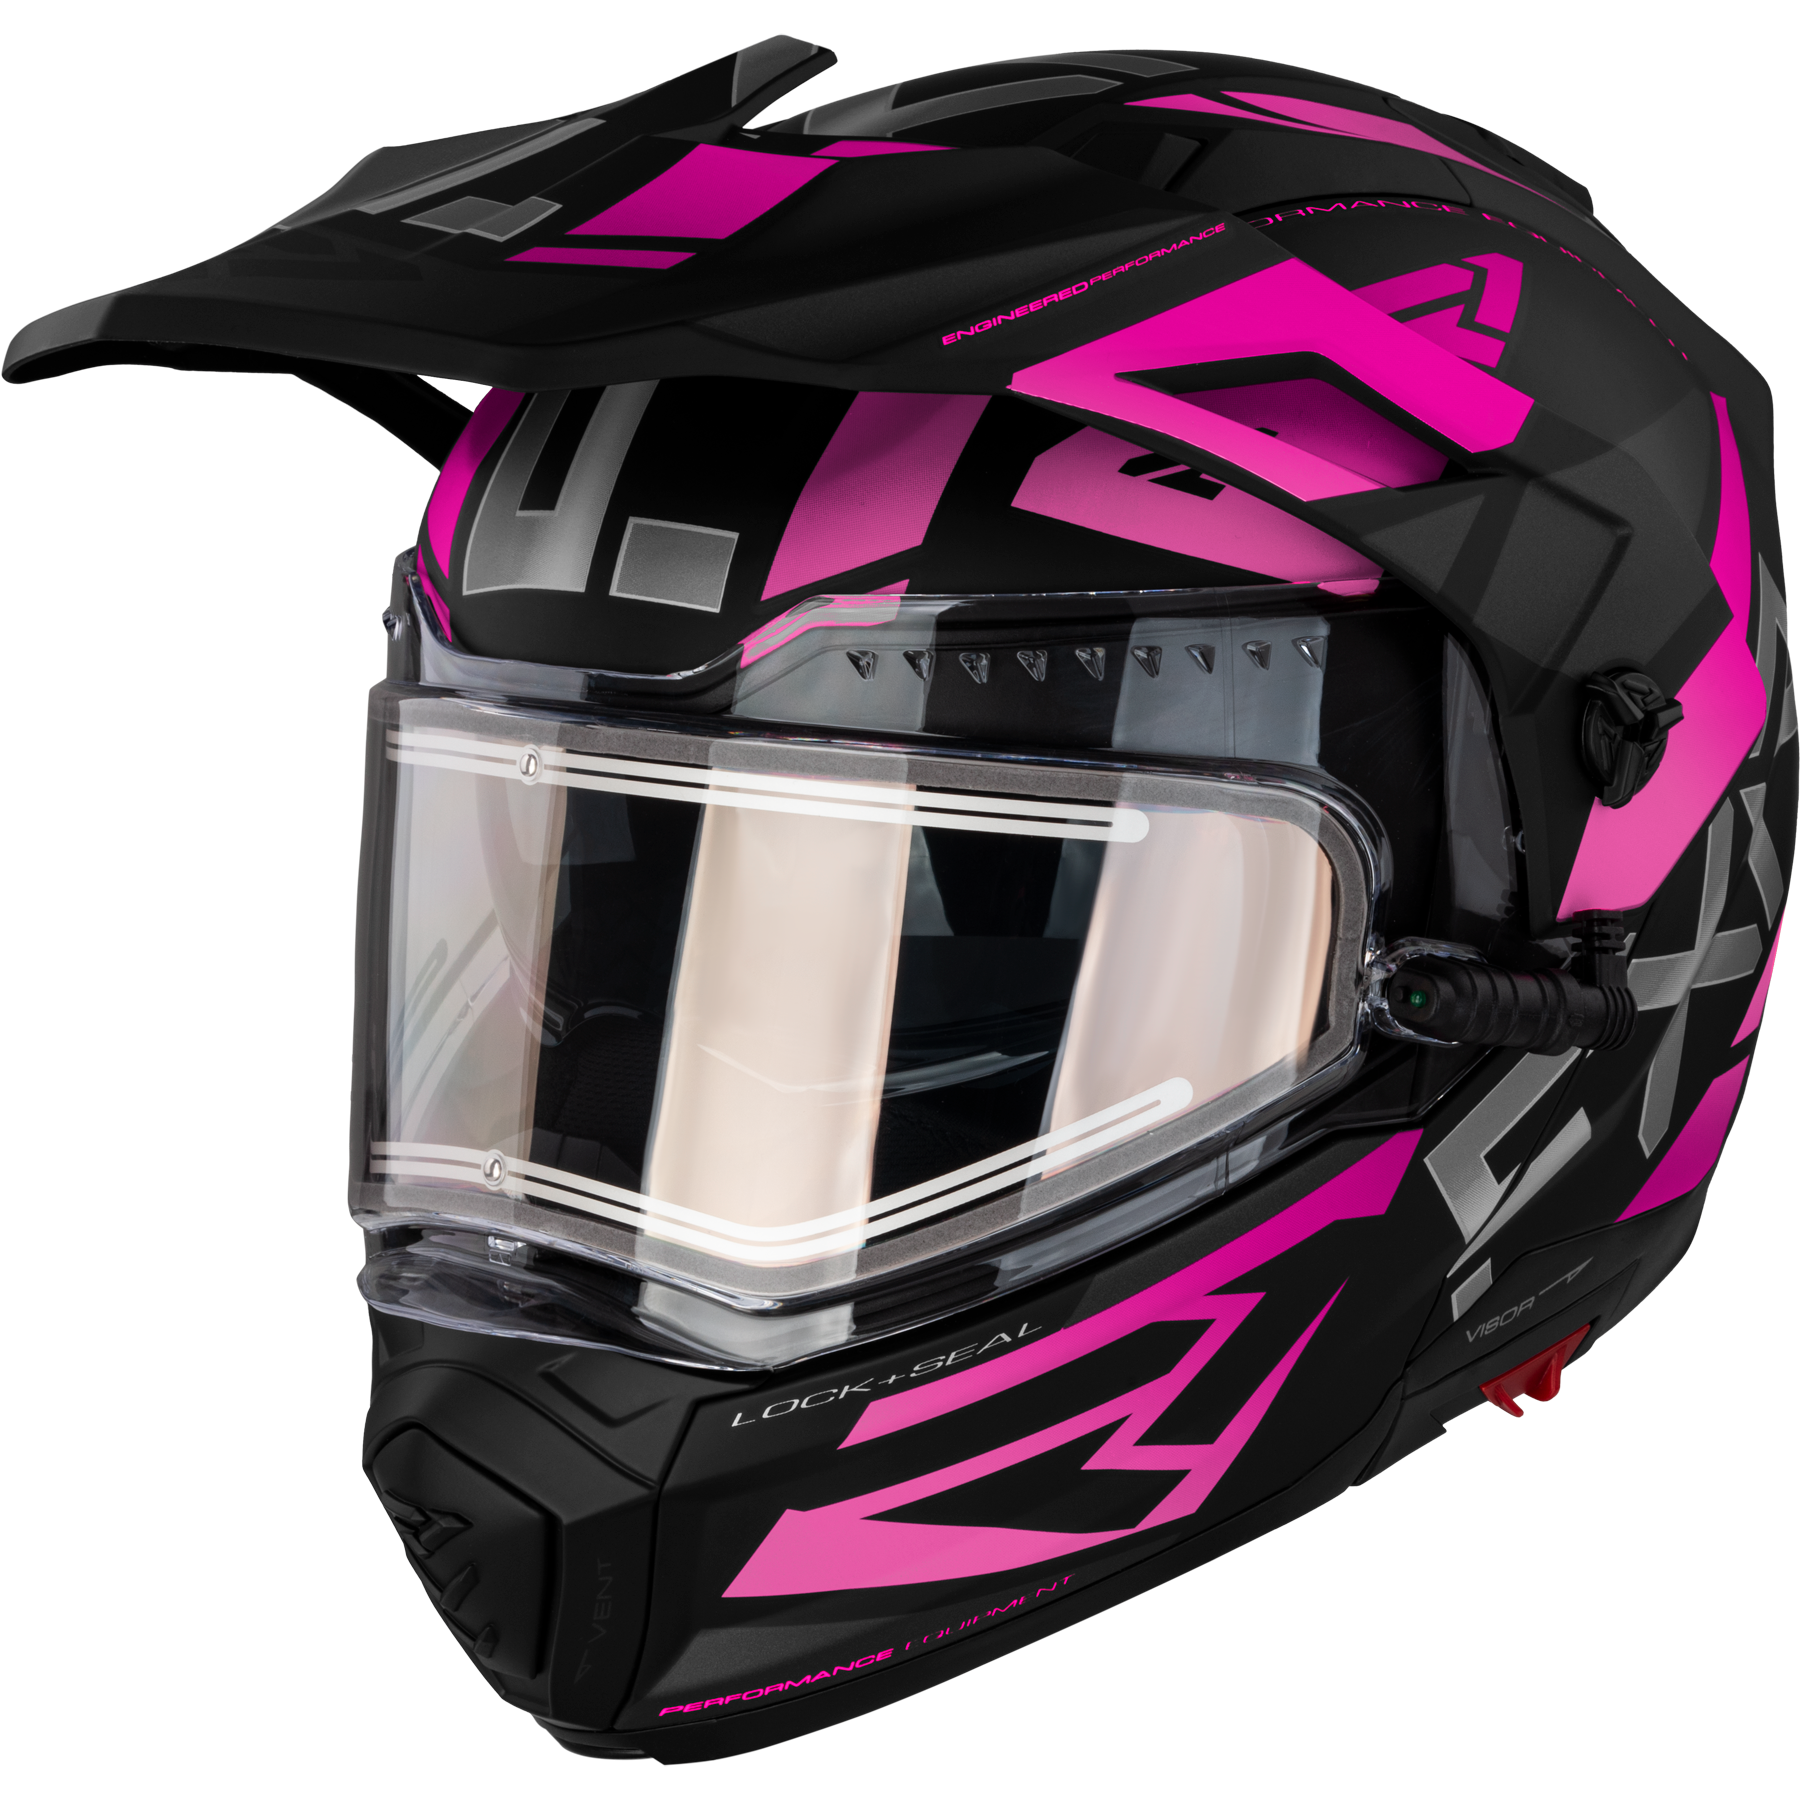 fxr racing helmets adult maverick x electric shield - snowmobile